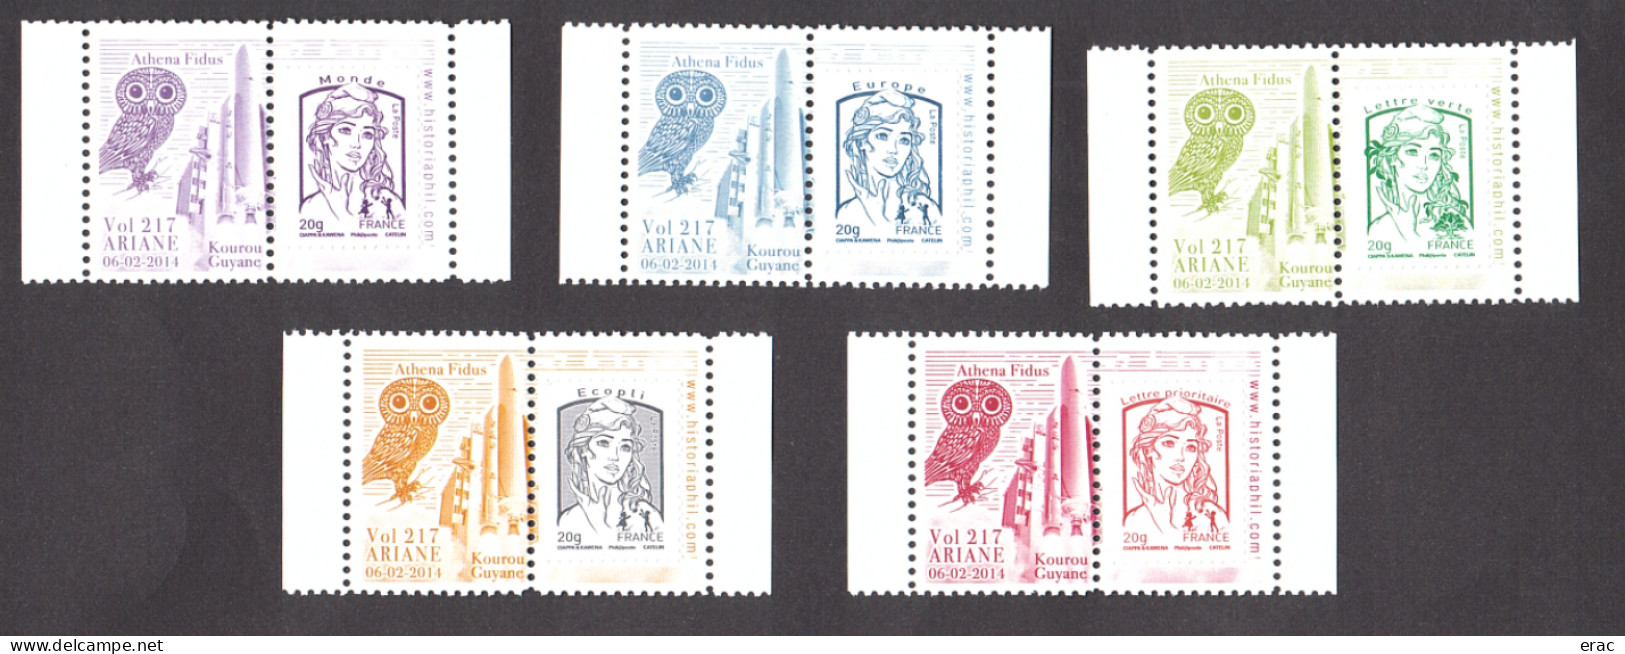 5 Porte-timbres Gommés - 2014 Ariane Vol 217 - Athena Fidus- Avec TVP Marianne De Ciappa & Kawena Neufs - 2013-2018 Marianne Of Ciappa-Kawena